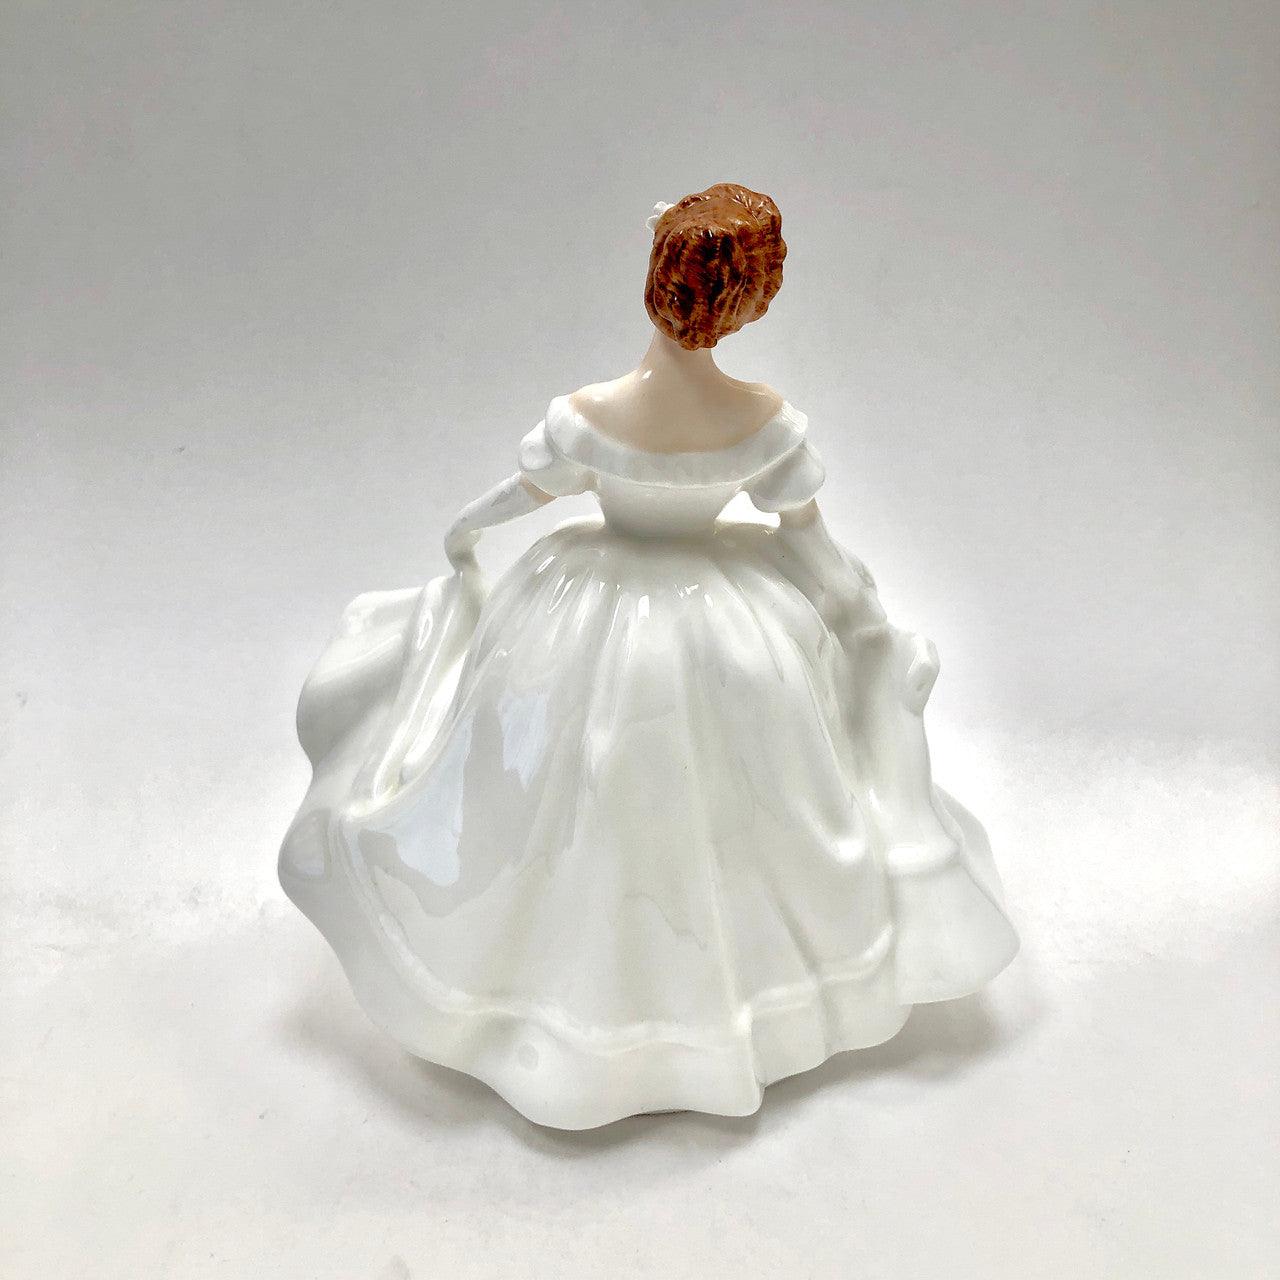 Royal Doulton, Nancy, HN2955, HN 2955 , Figurine, Vintage, England, Pauline Parsons, White, Lady